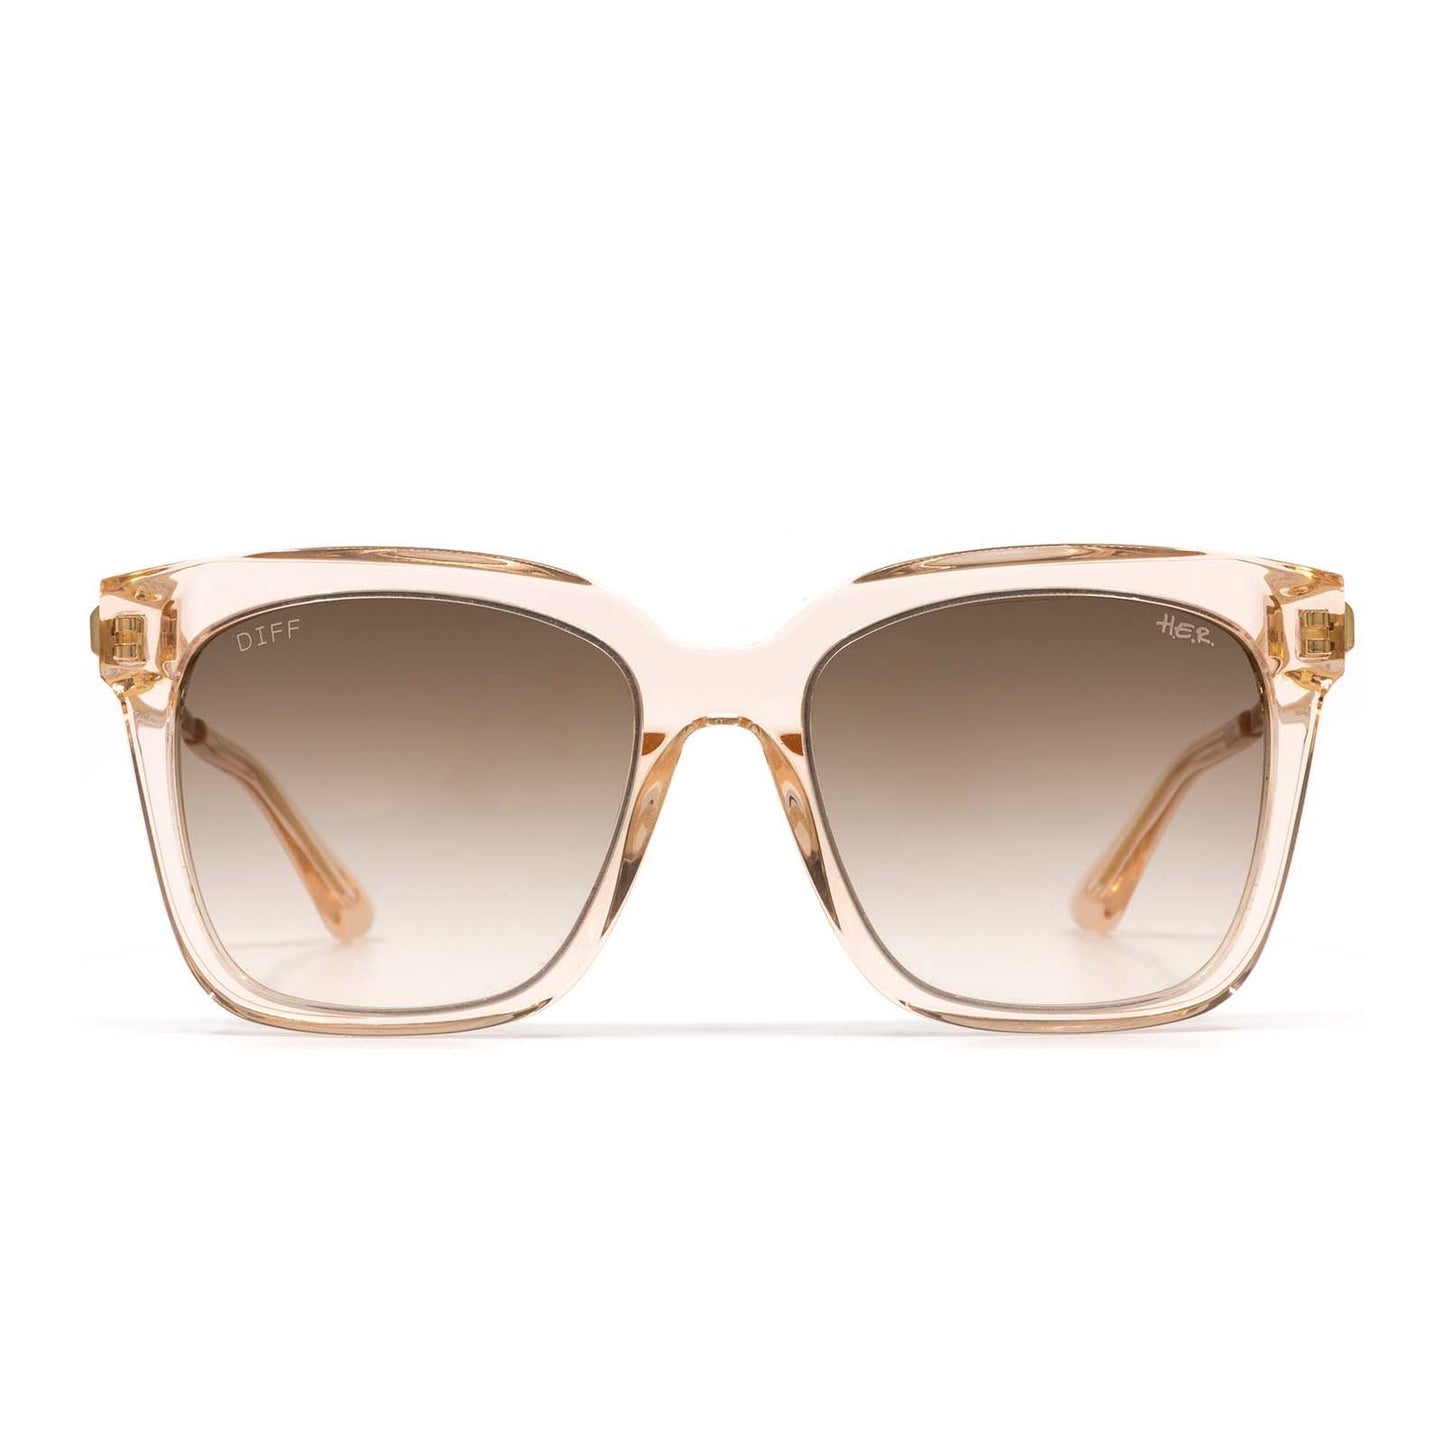 H.E.R - Bella Ginger Crystal + Light Brown Gradient Sunglasses